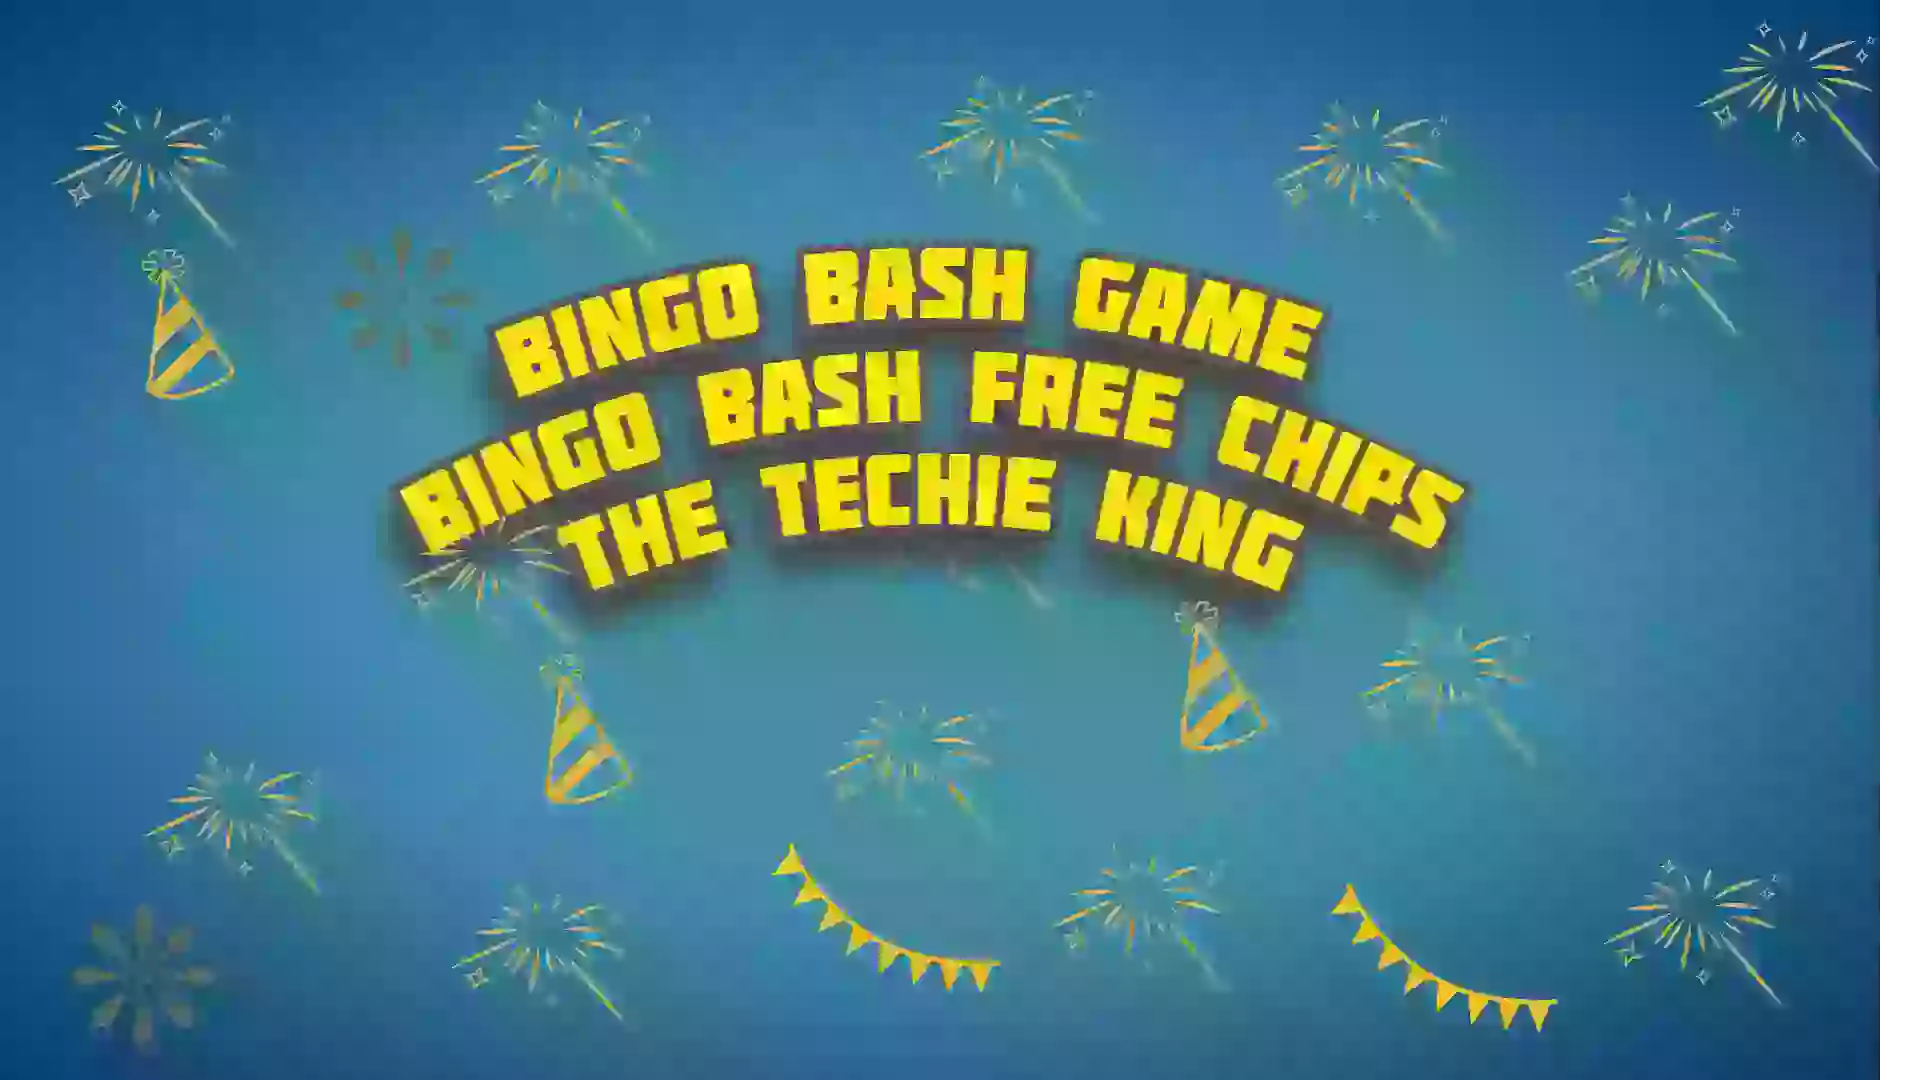 Bingo bash free chips | Bingo bash freebies - The Techie King